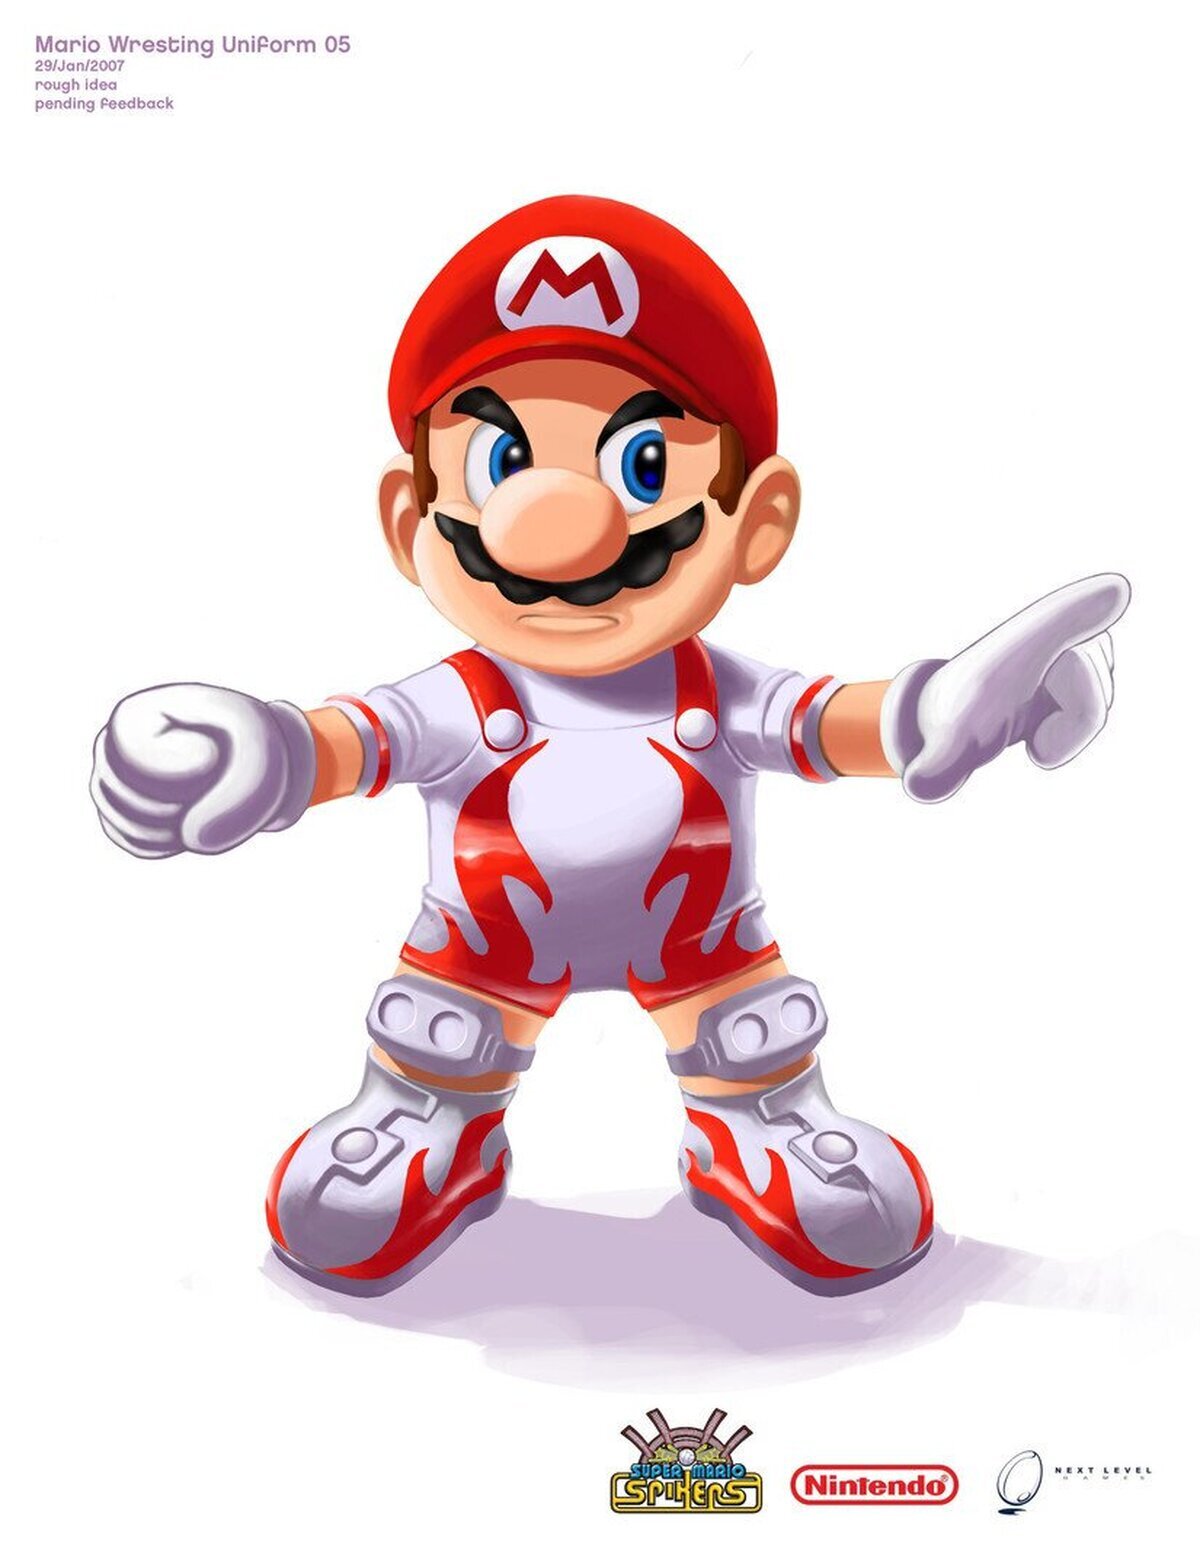 Se desvela Super Mario Spikers un juego de lucha libre-volleyball cancelado por Nintendo